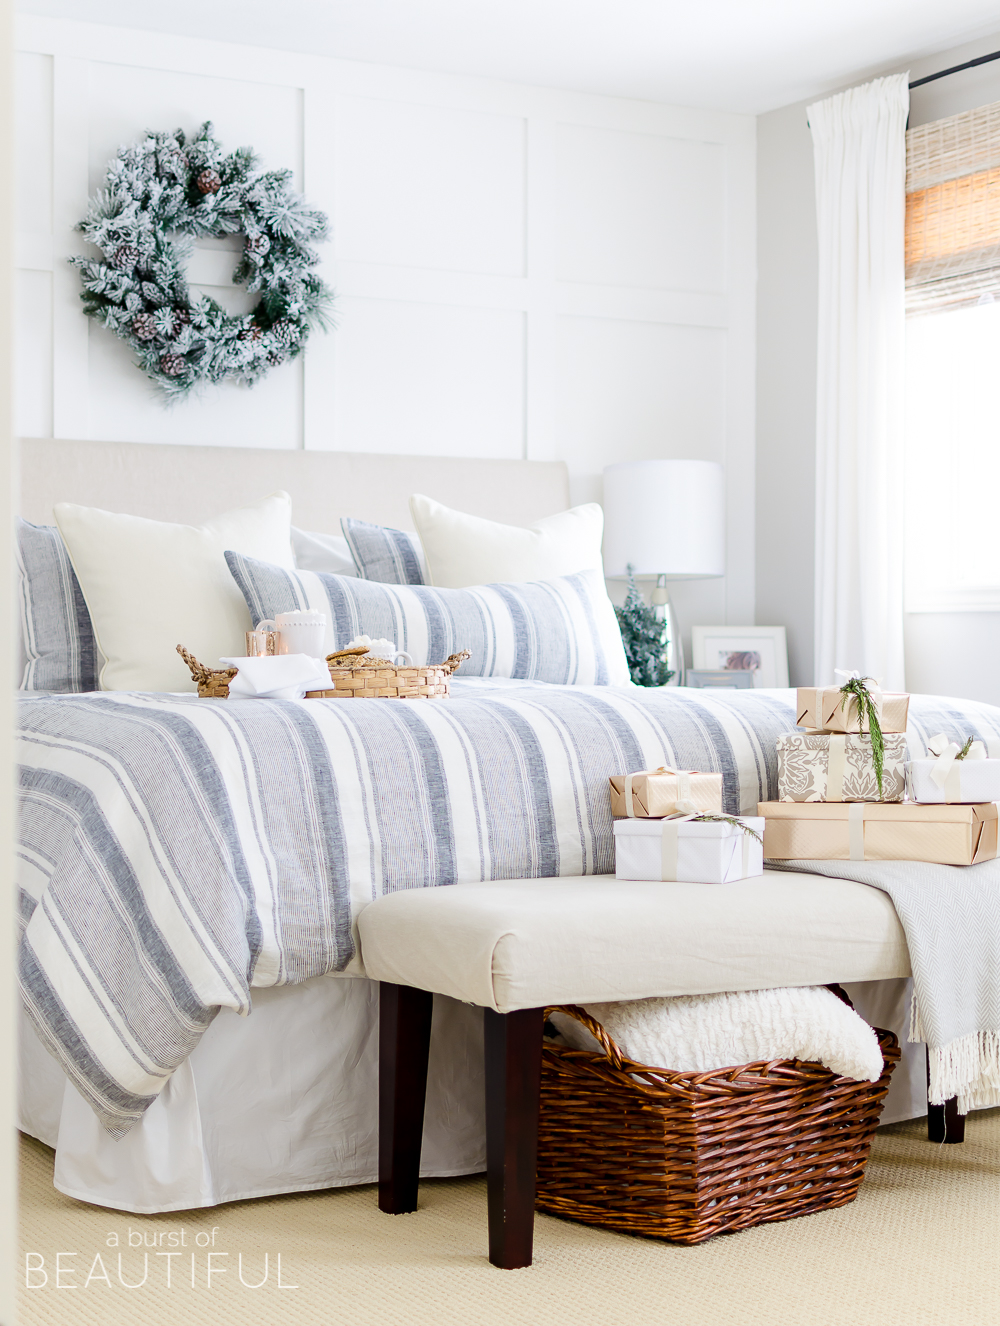 A cozy neutral Christmas bedroom full of farmhouse charm